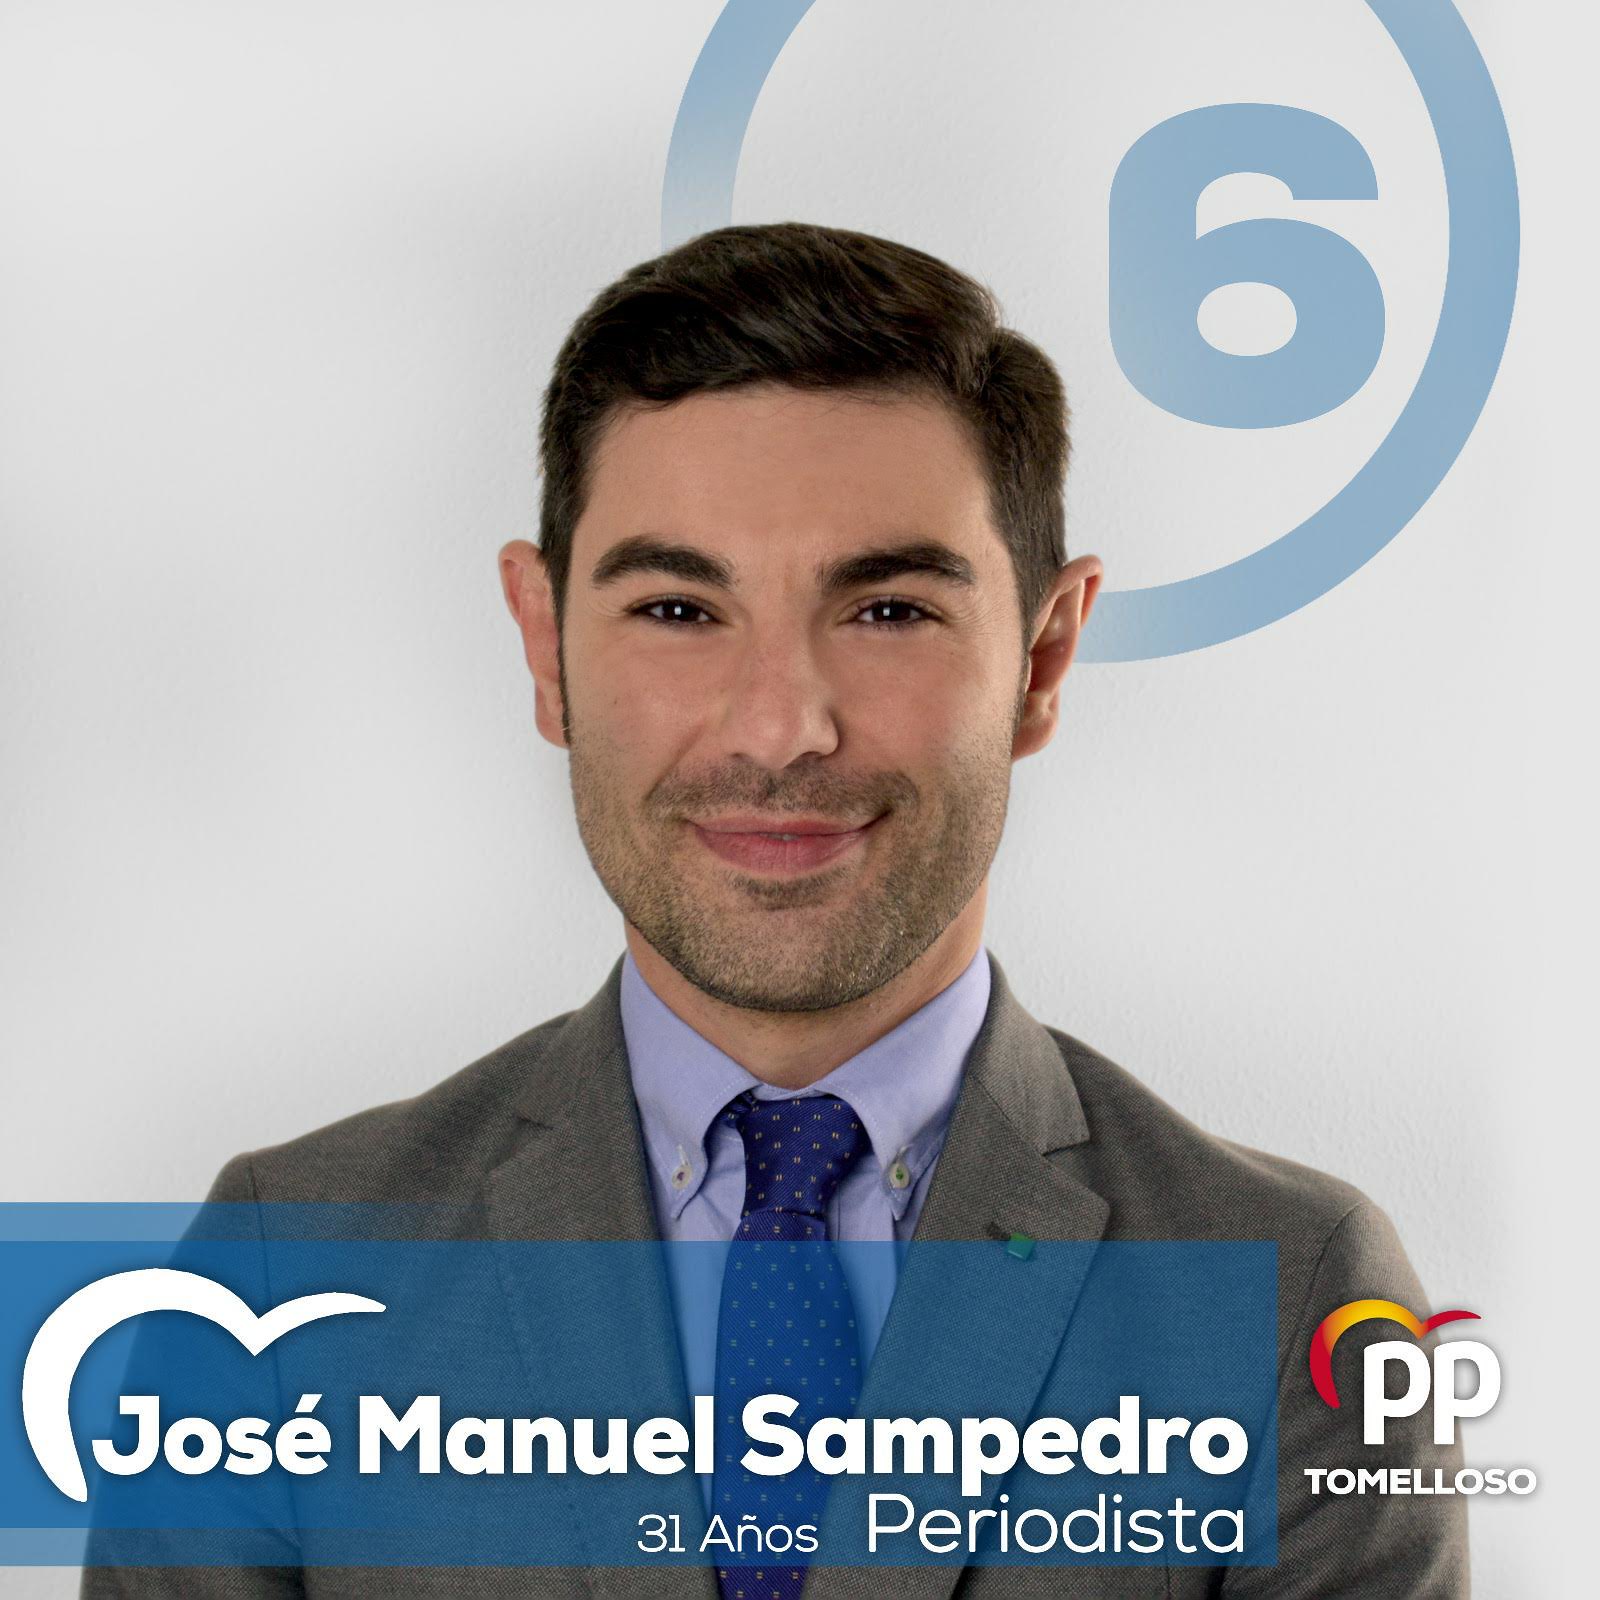 jose-manuel-sampedro-pp-tomelloso